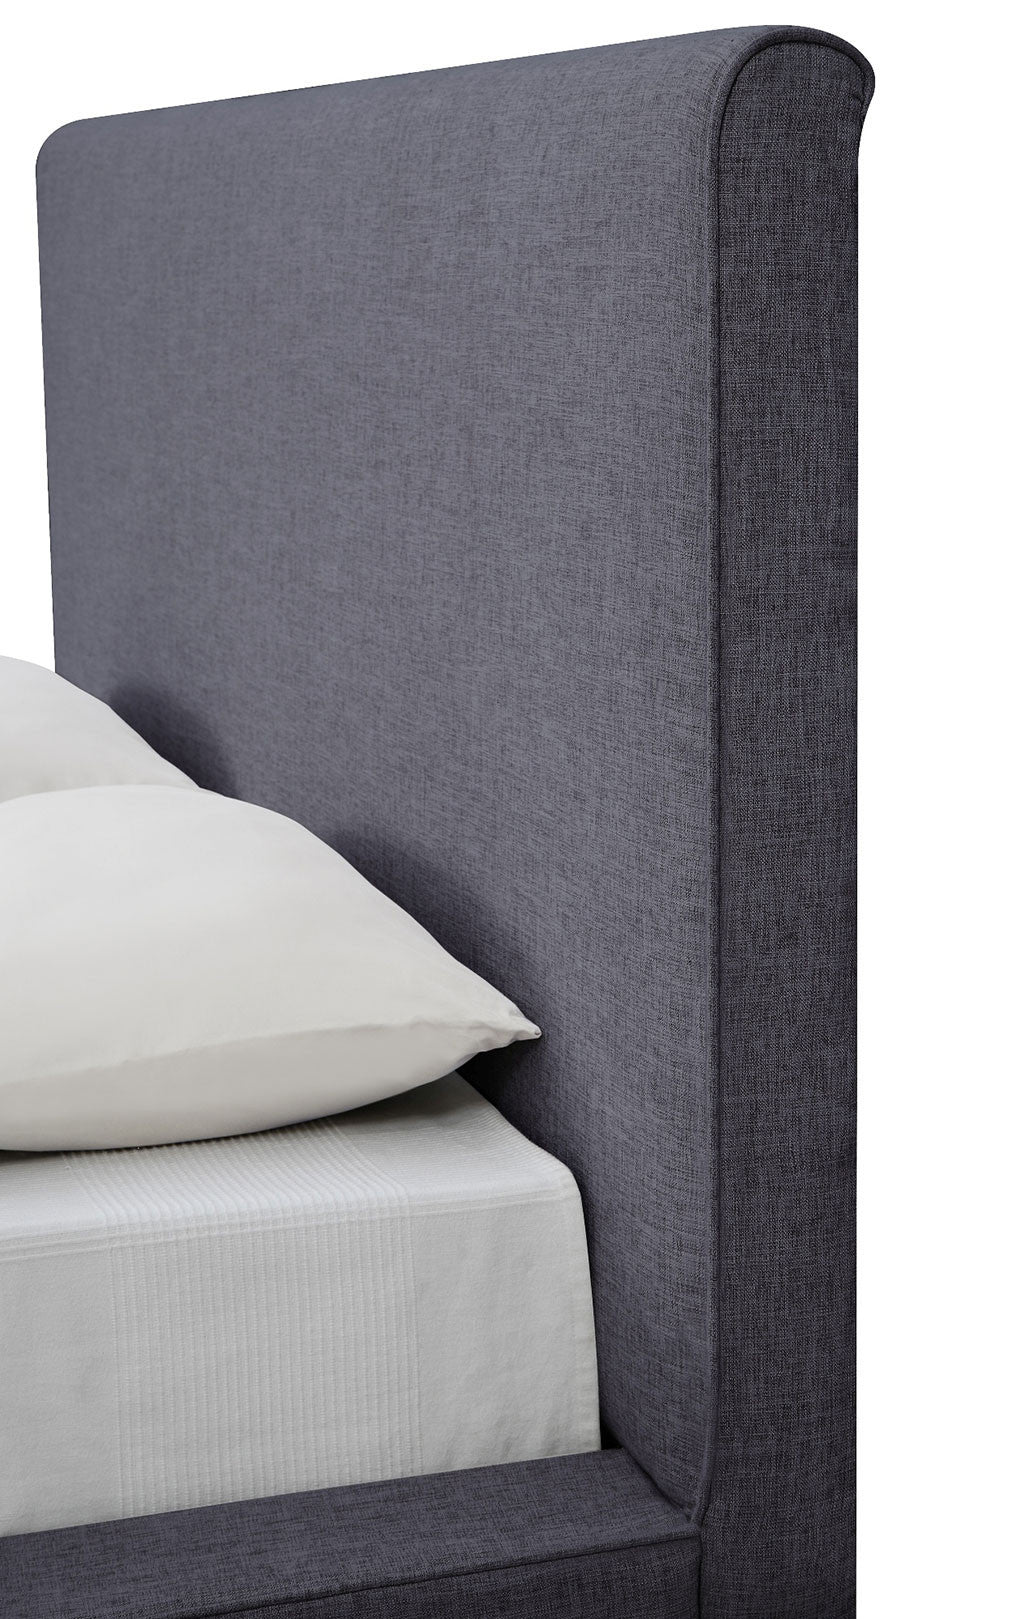 Neo Linen Bed Gray